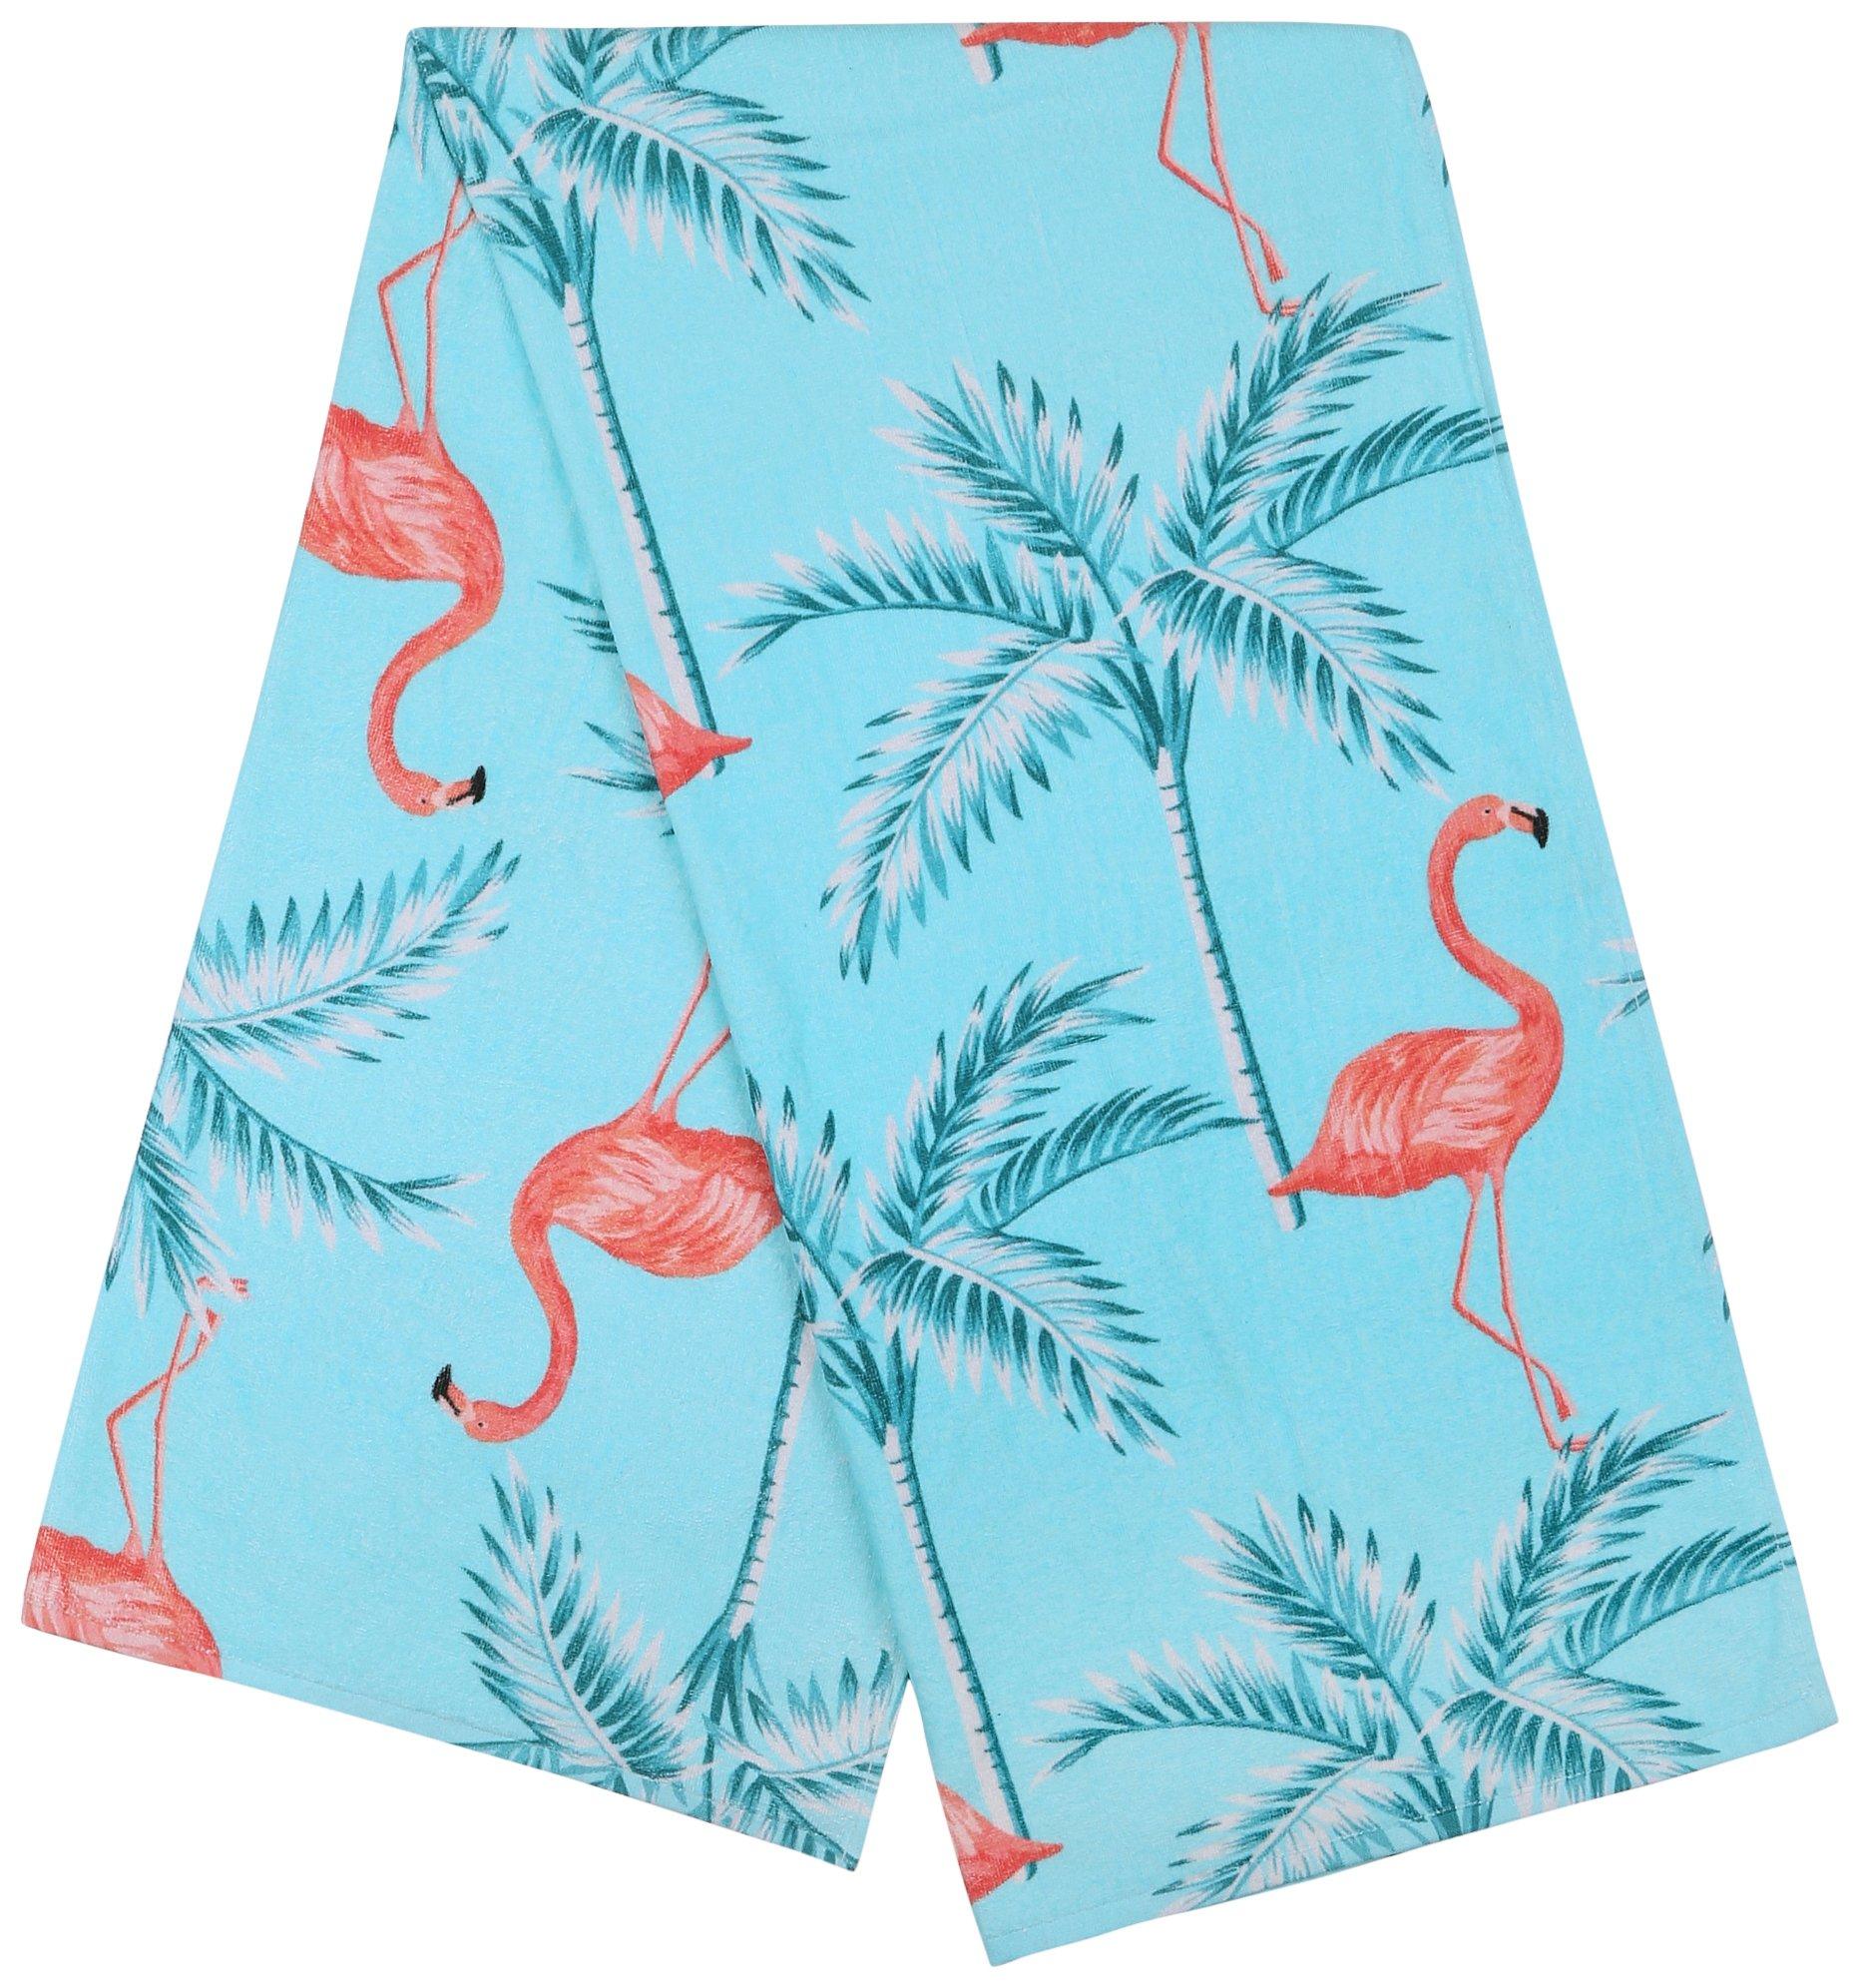 Flamingo Fun Beach Towel